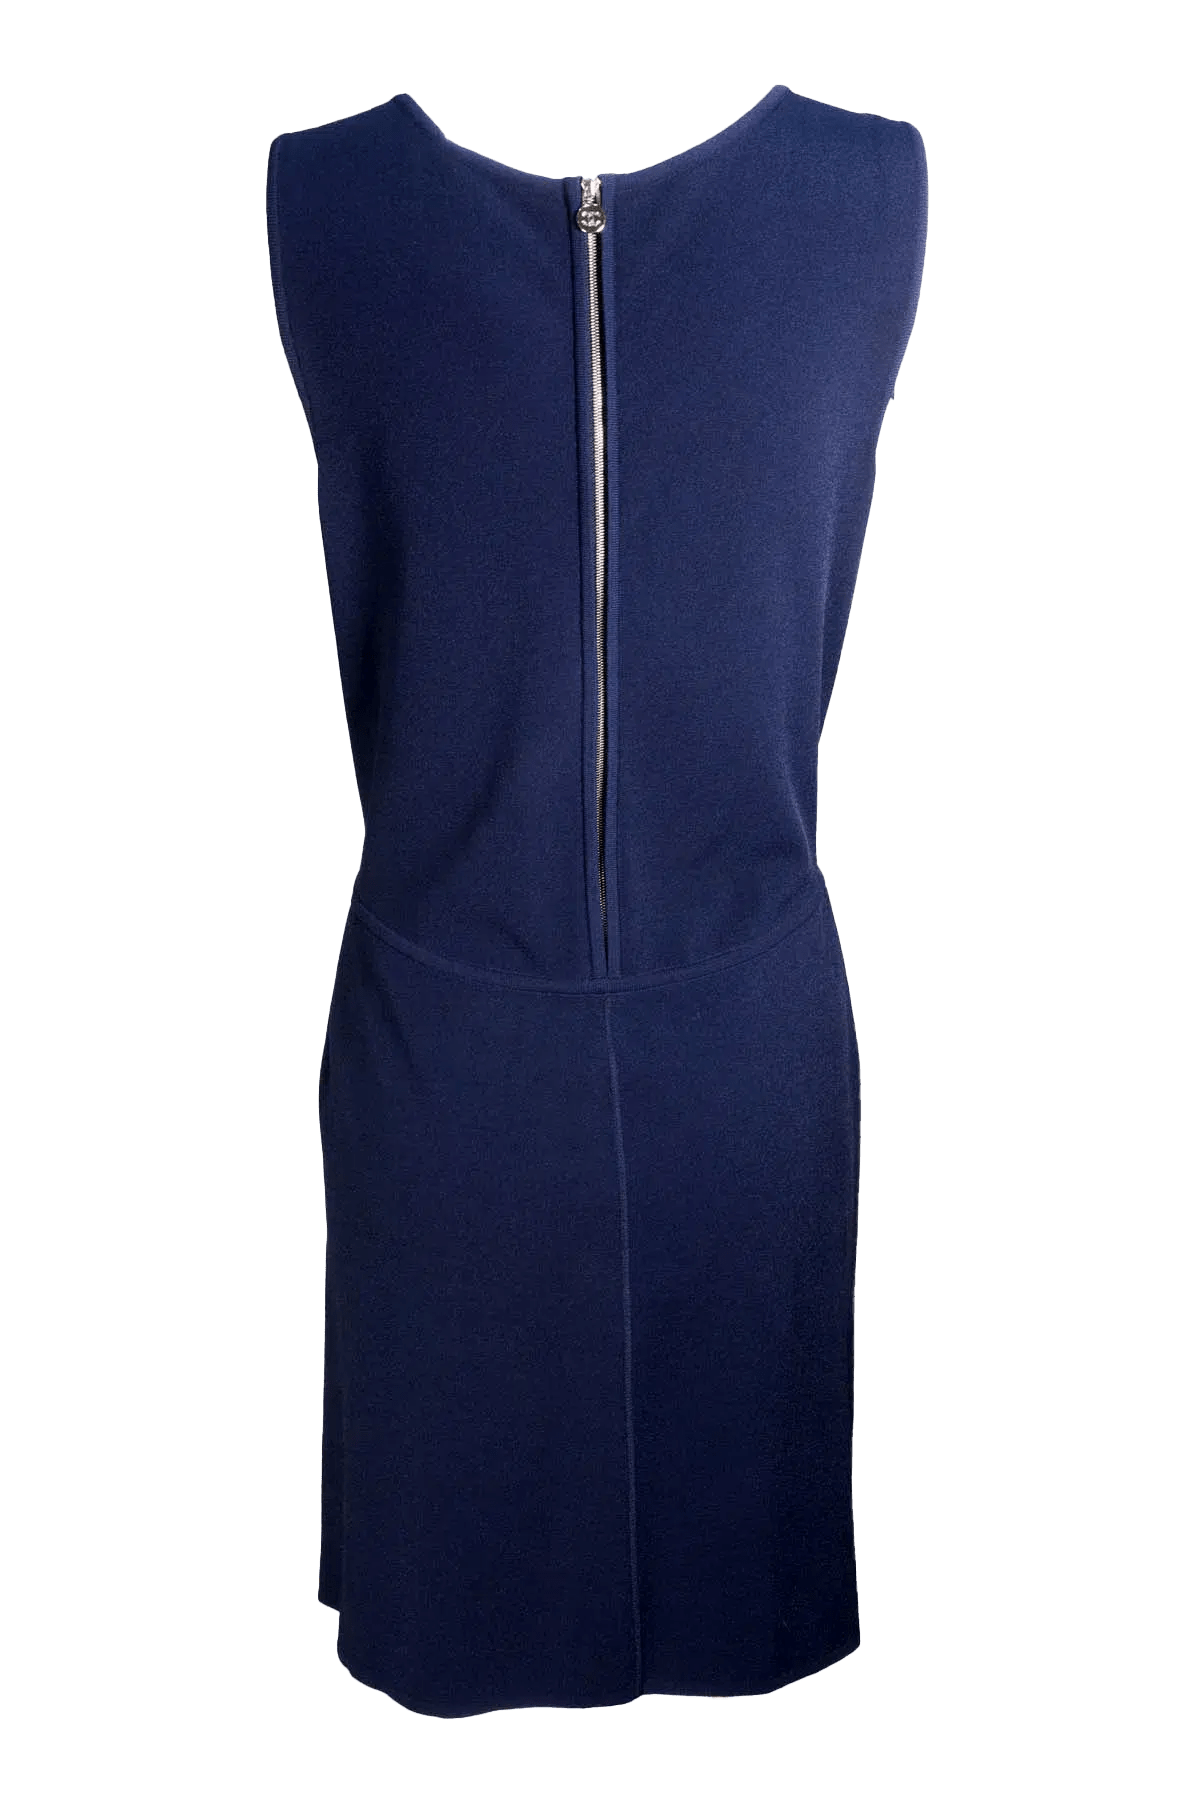 Chanel Size 40 Sleeveless Navy Dress